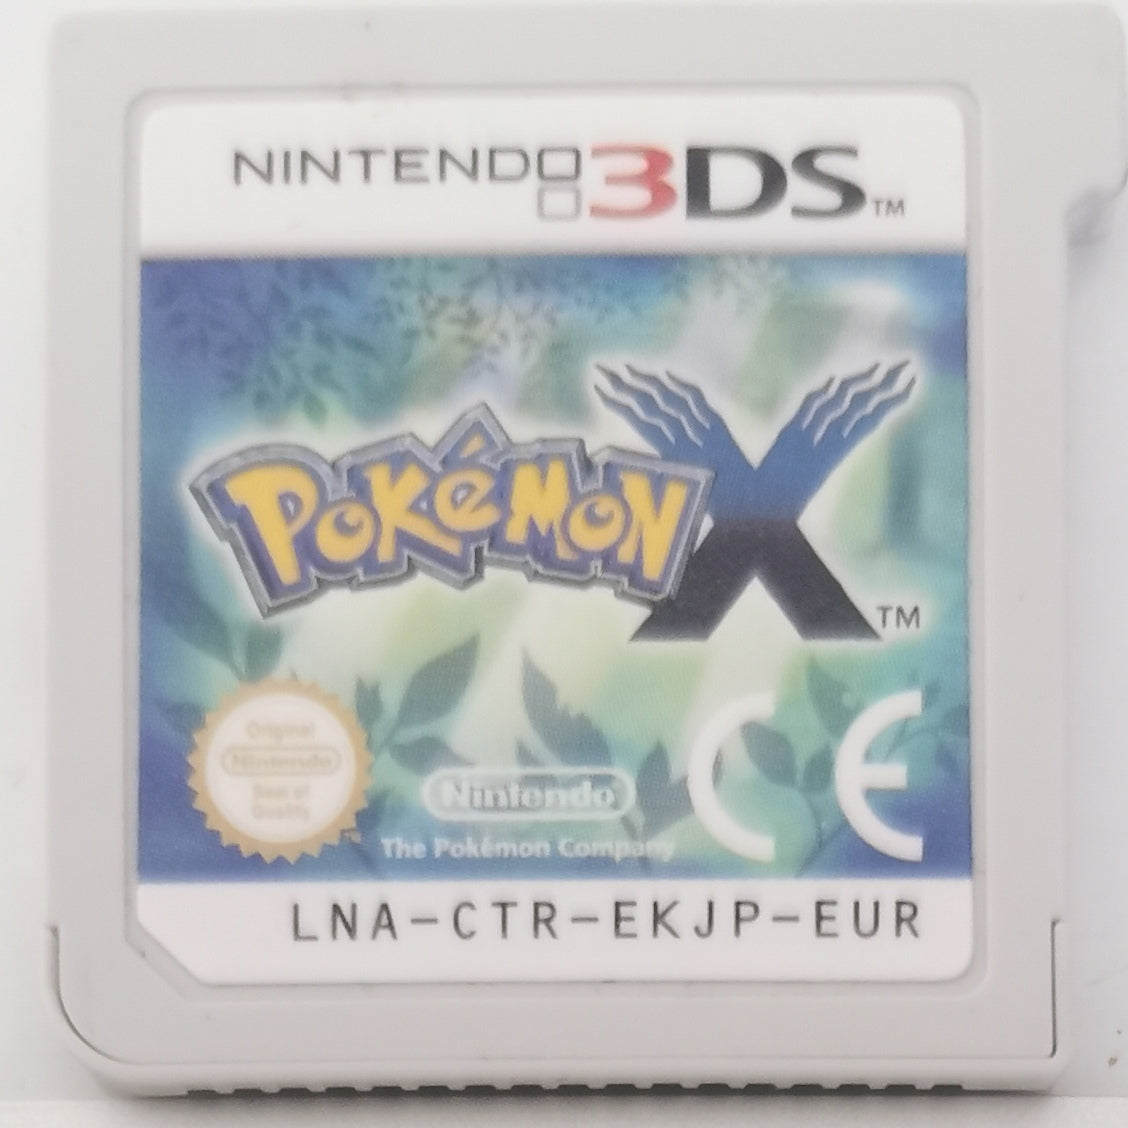 Pokmon X (Nintendo 3DS) [Gut]